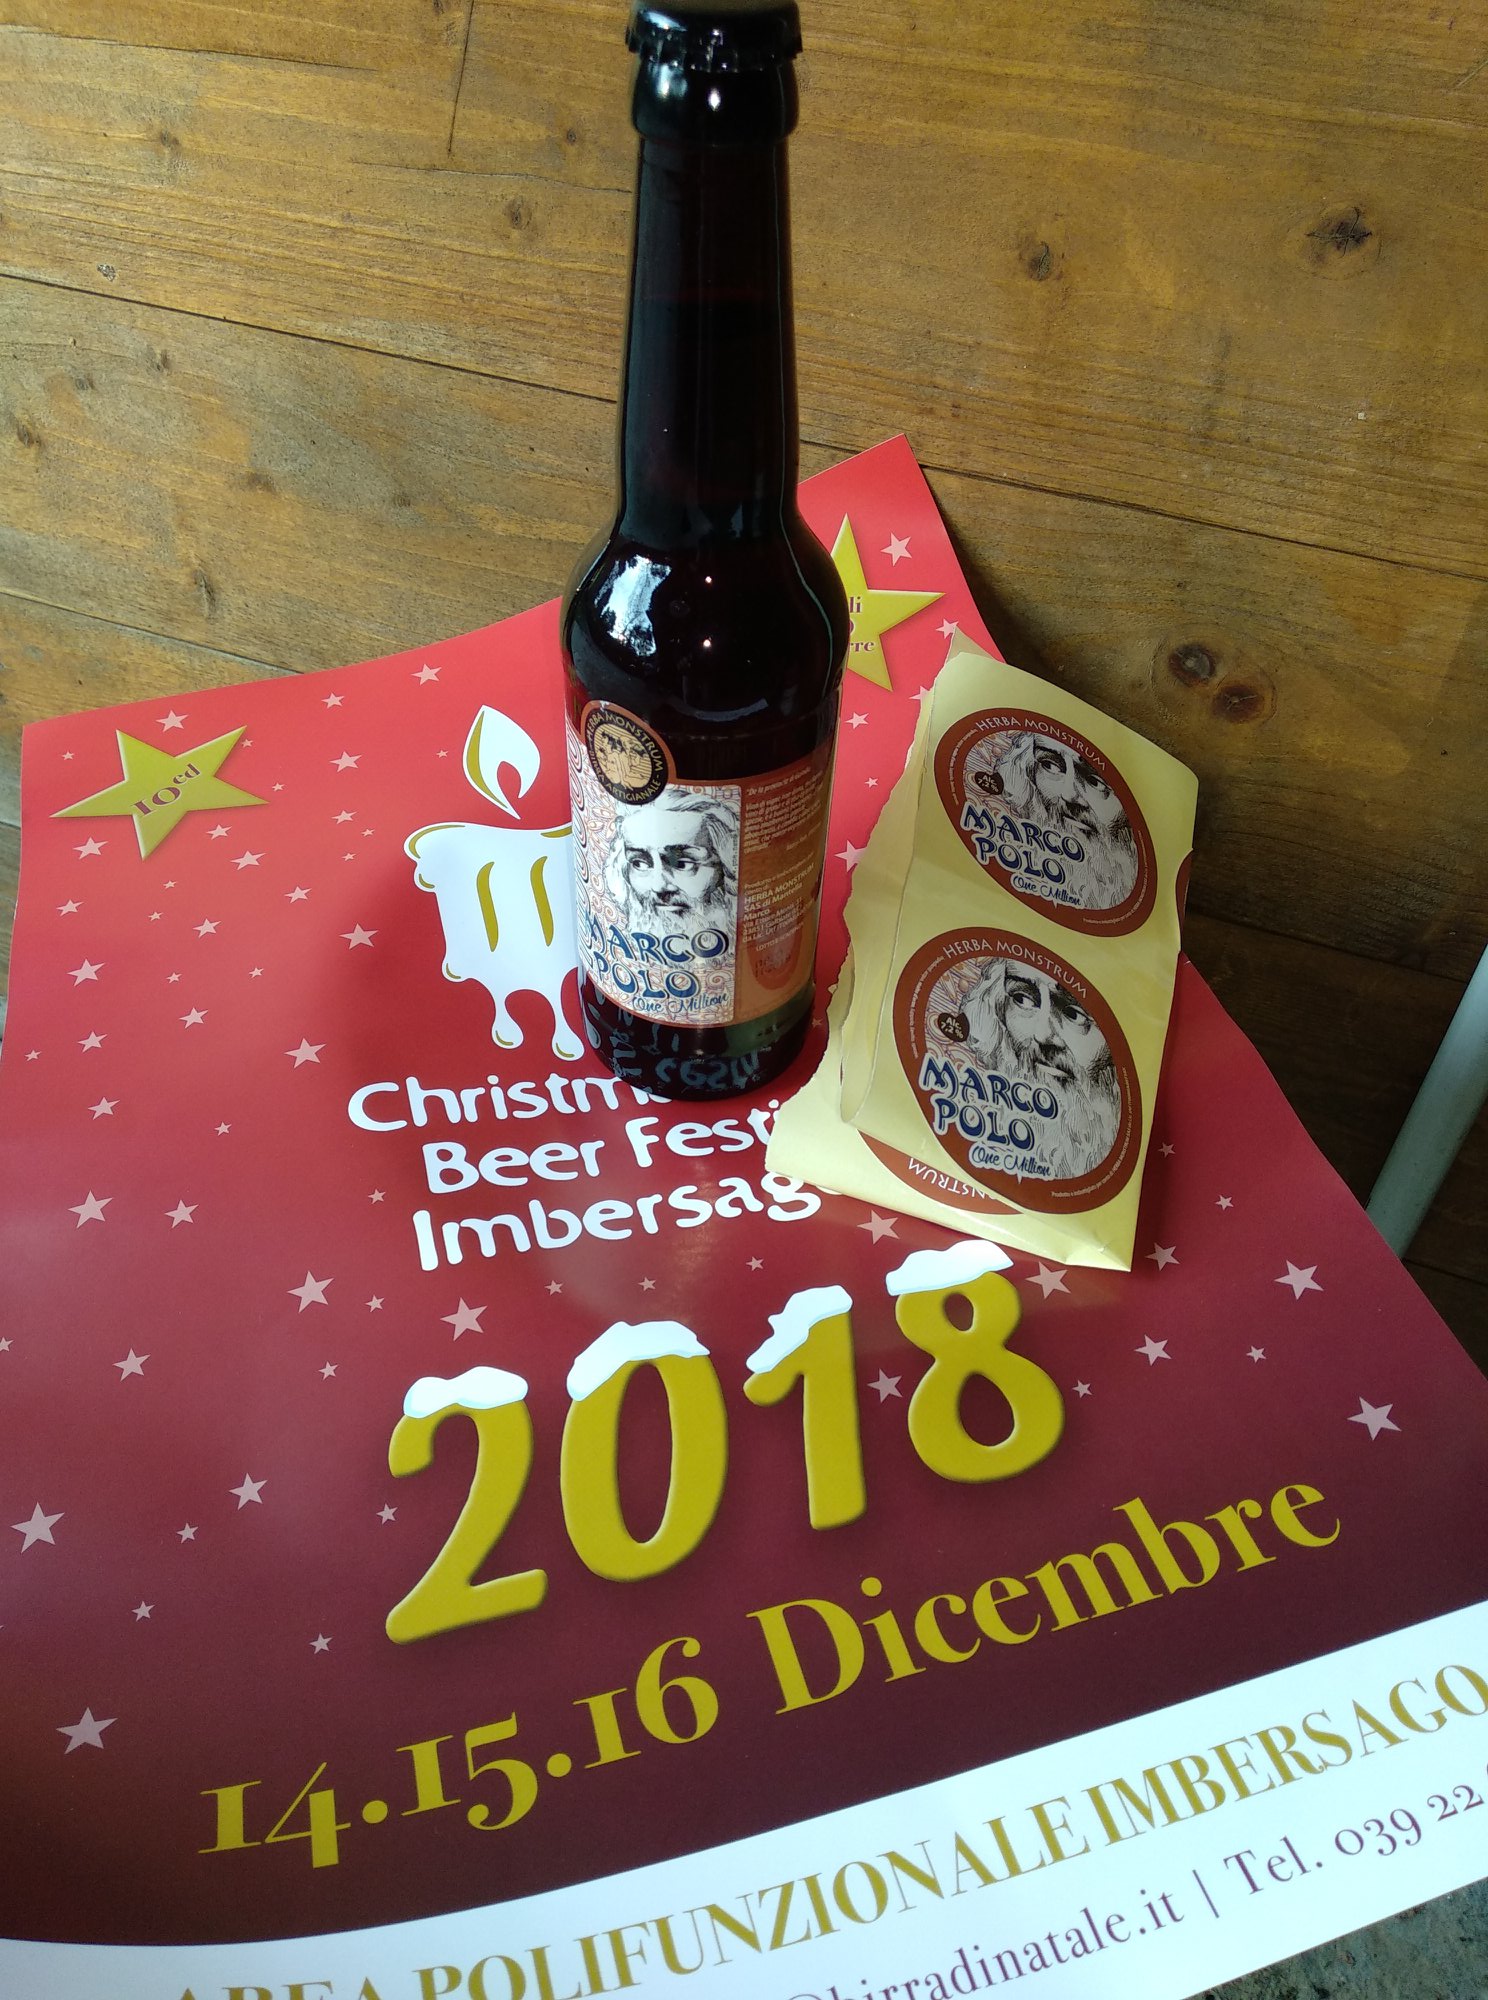 Christmas Beer Festival 2018 - Imbersago. Herba Monstrum Marco Polo One Million